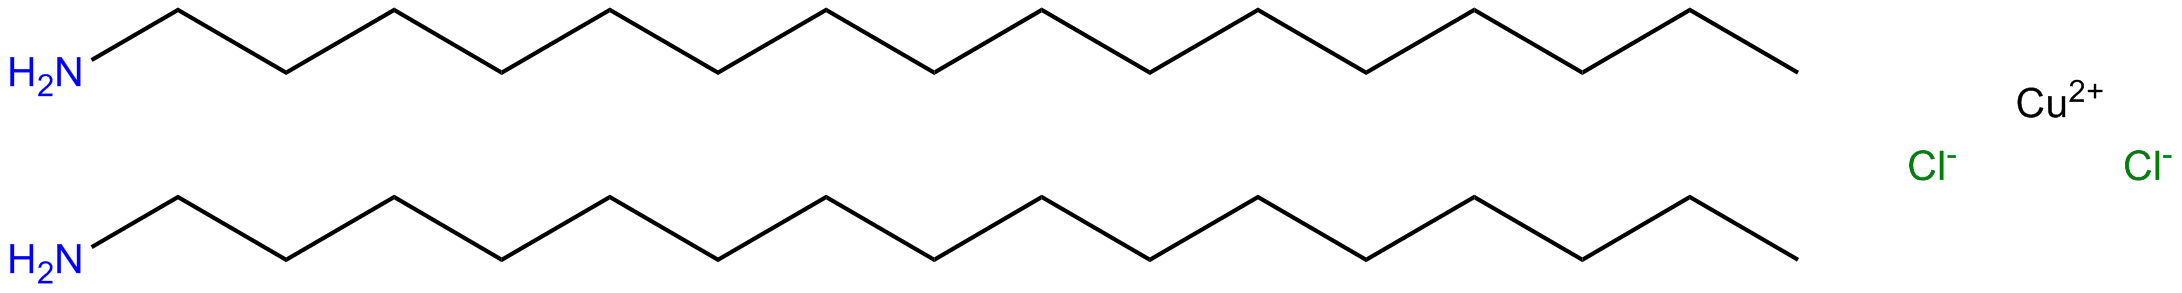 Image of dichlorobis(1-hexadeanamine)copper(II)